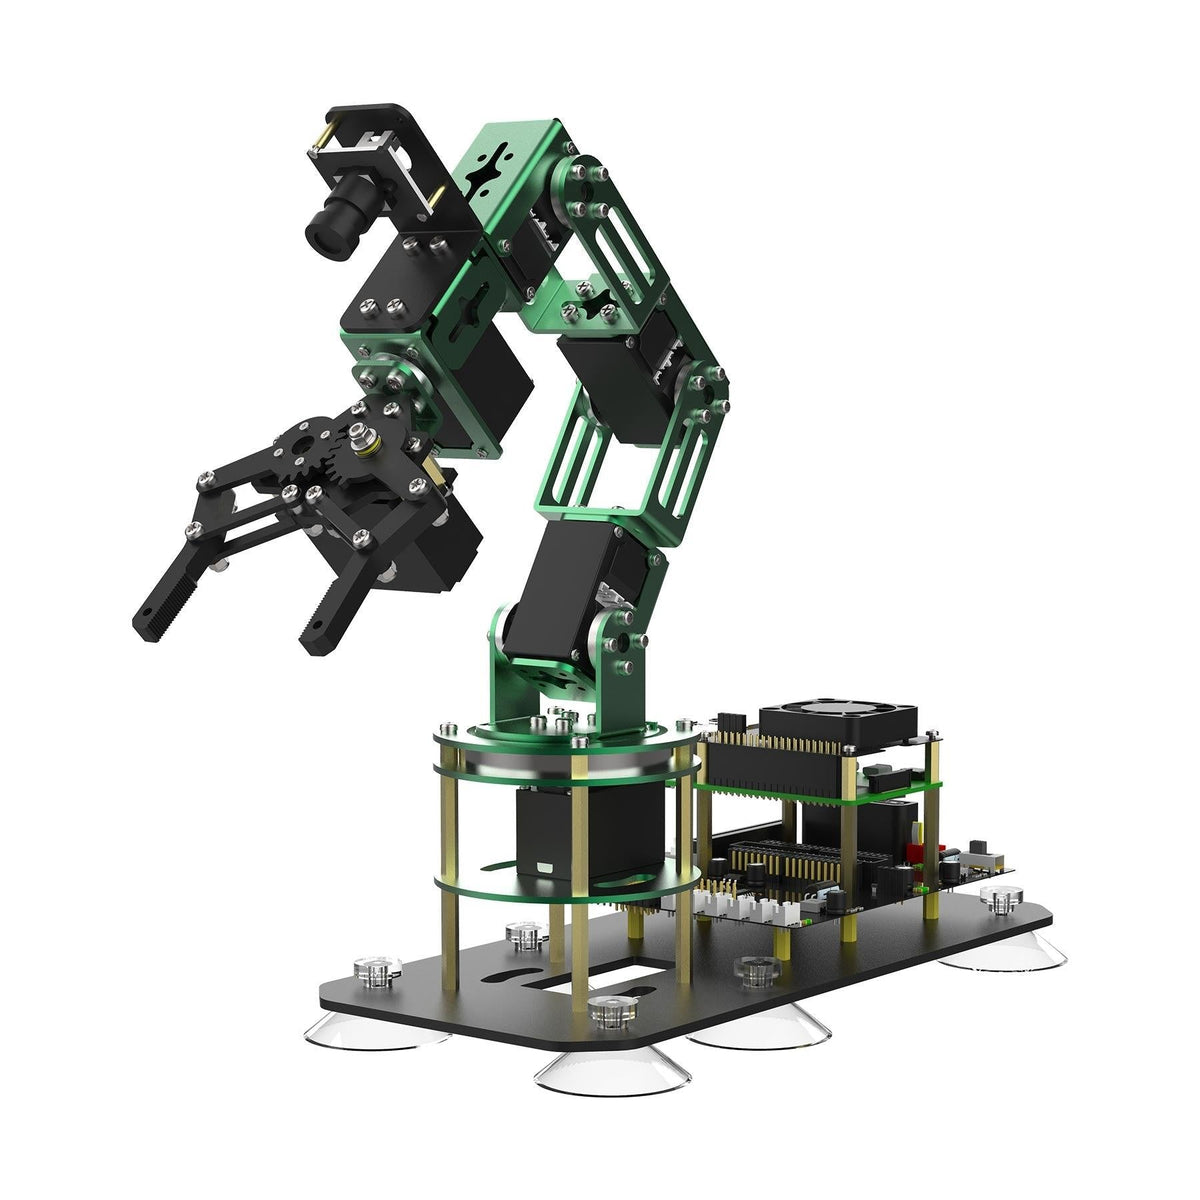 Yahboom DOFBOT AI Vision Robotic Arm ROS STEM Education Python Programming Robot for Raspberry Pi 4B 8GB/4GB